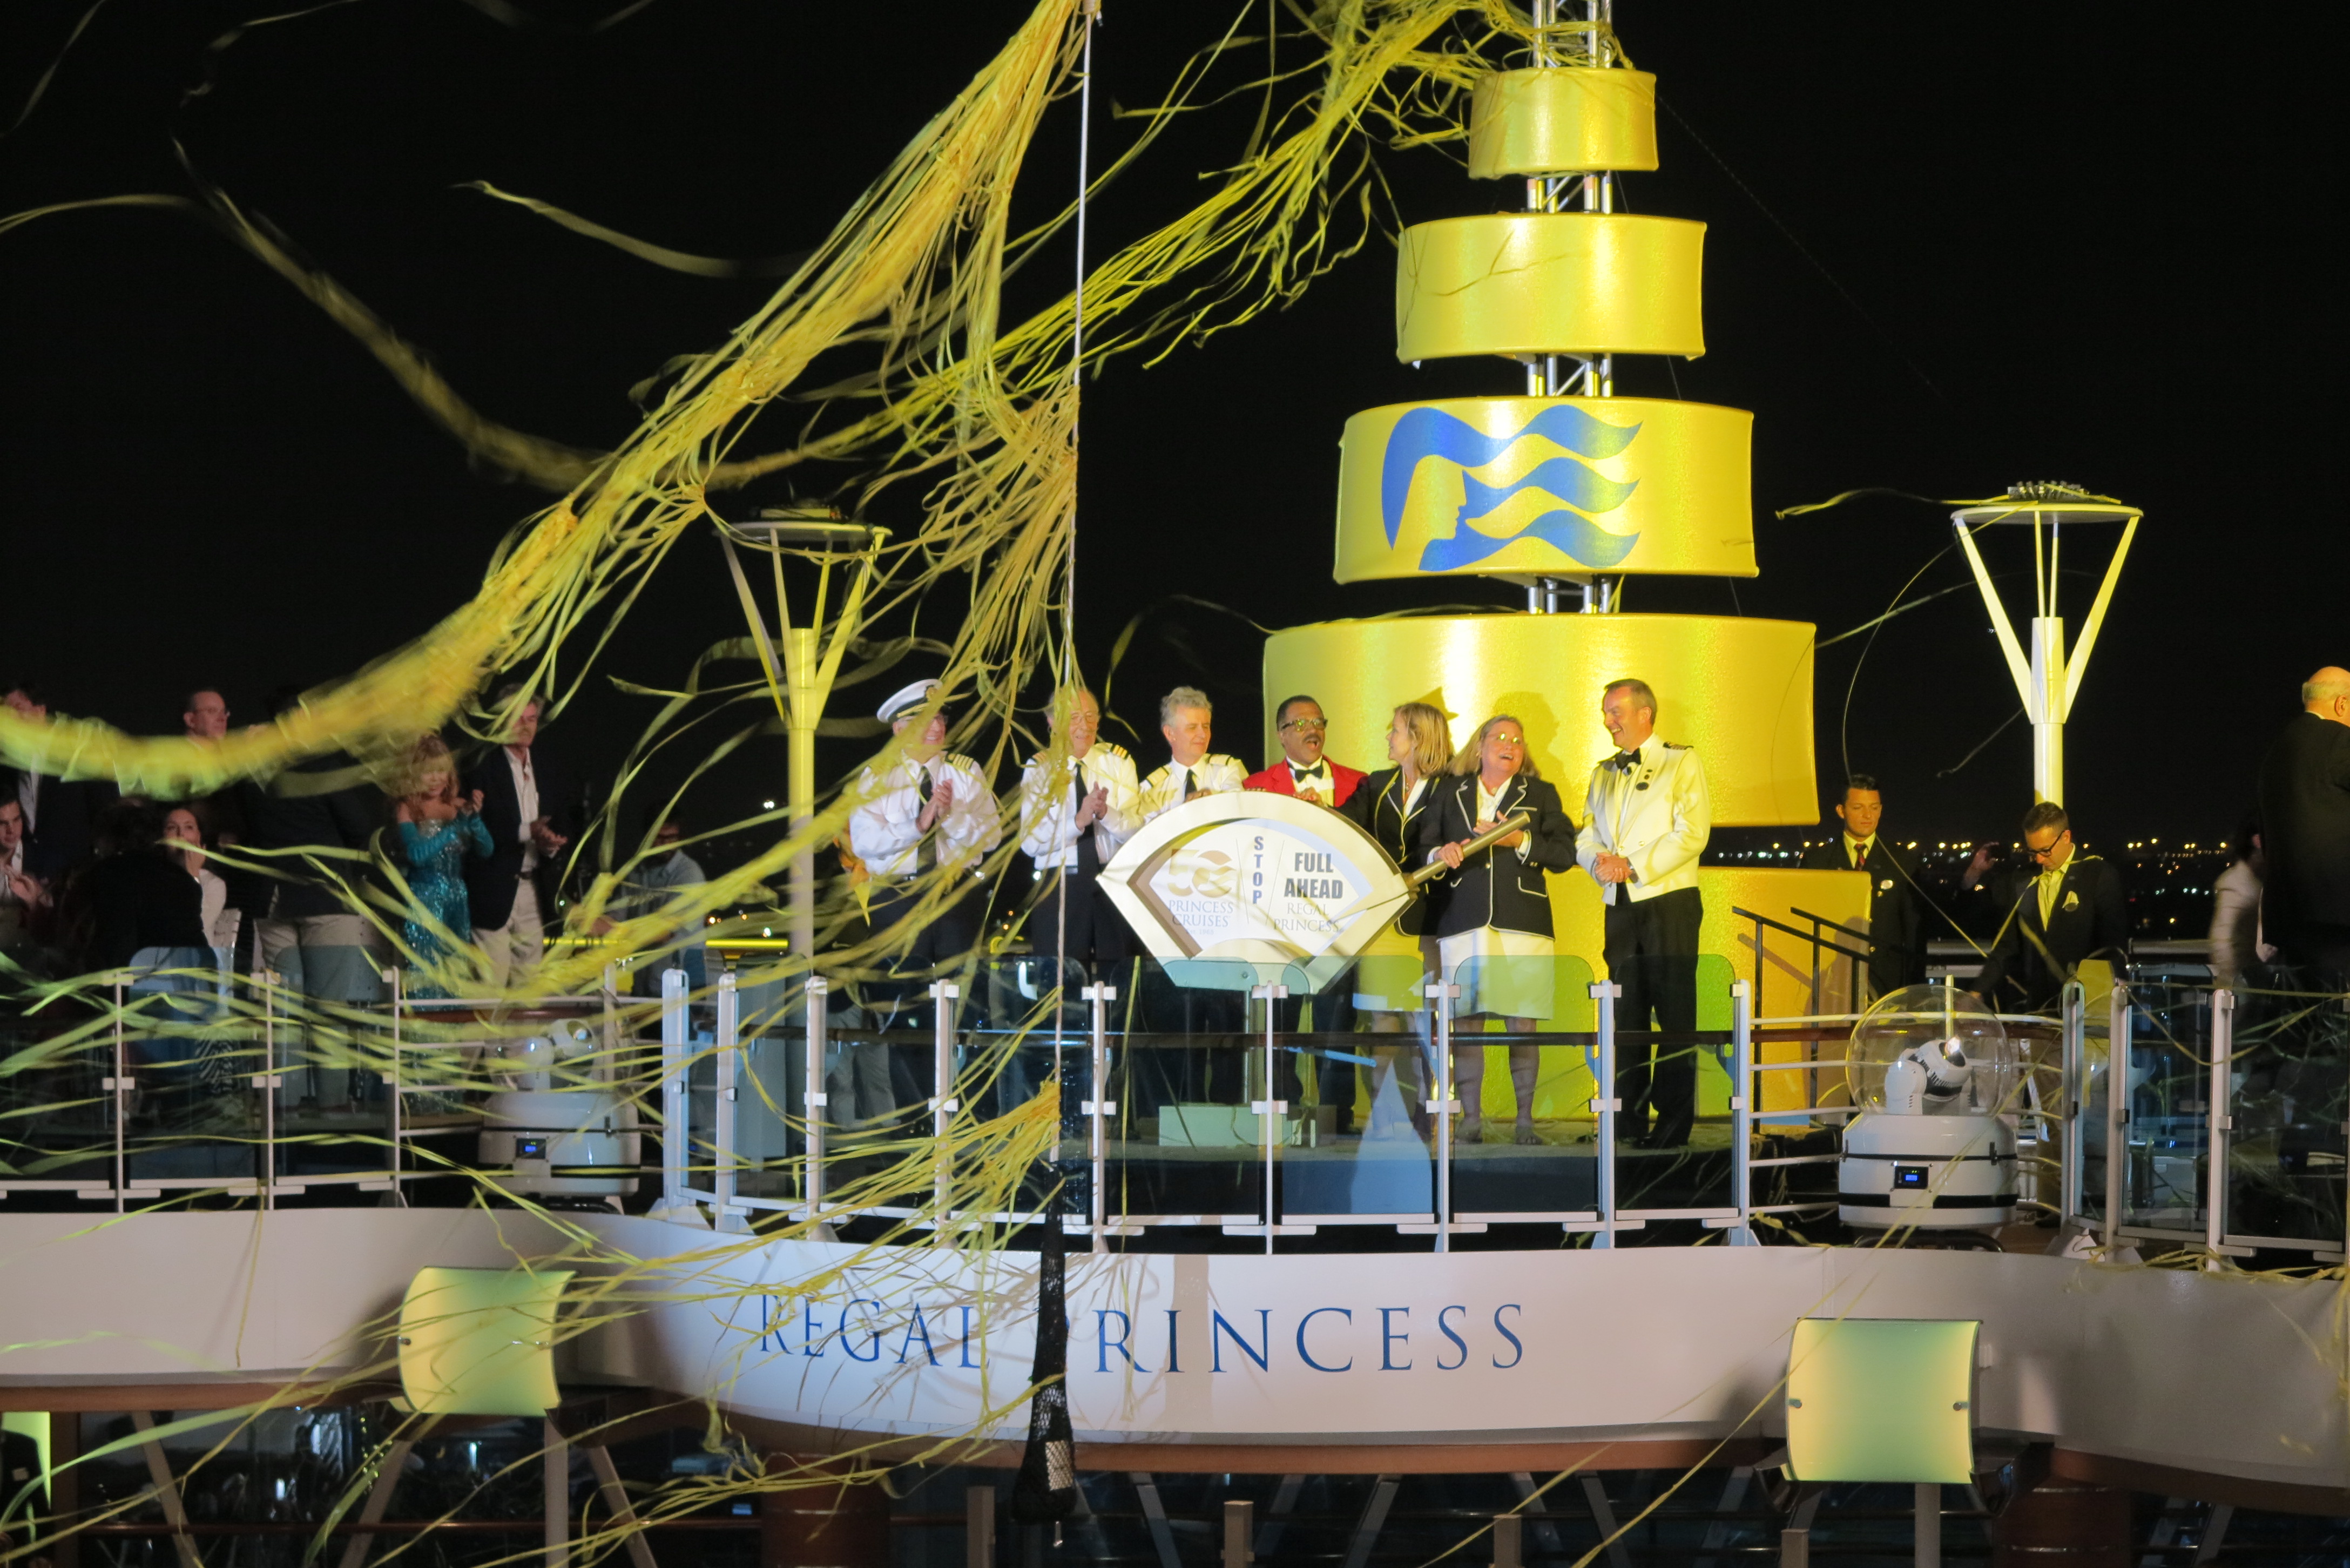 Celebration: Streamers descend after the ship is named